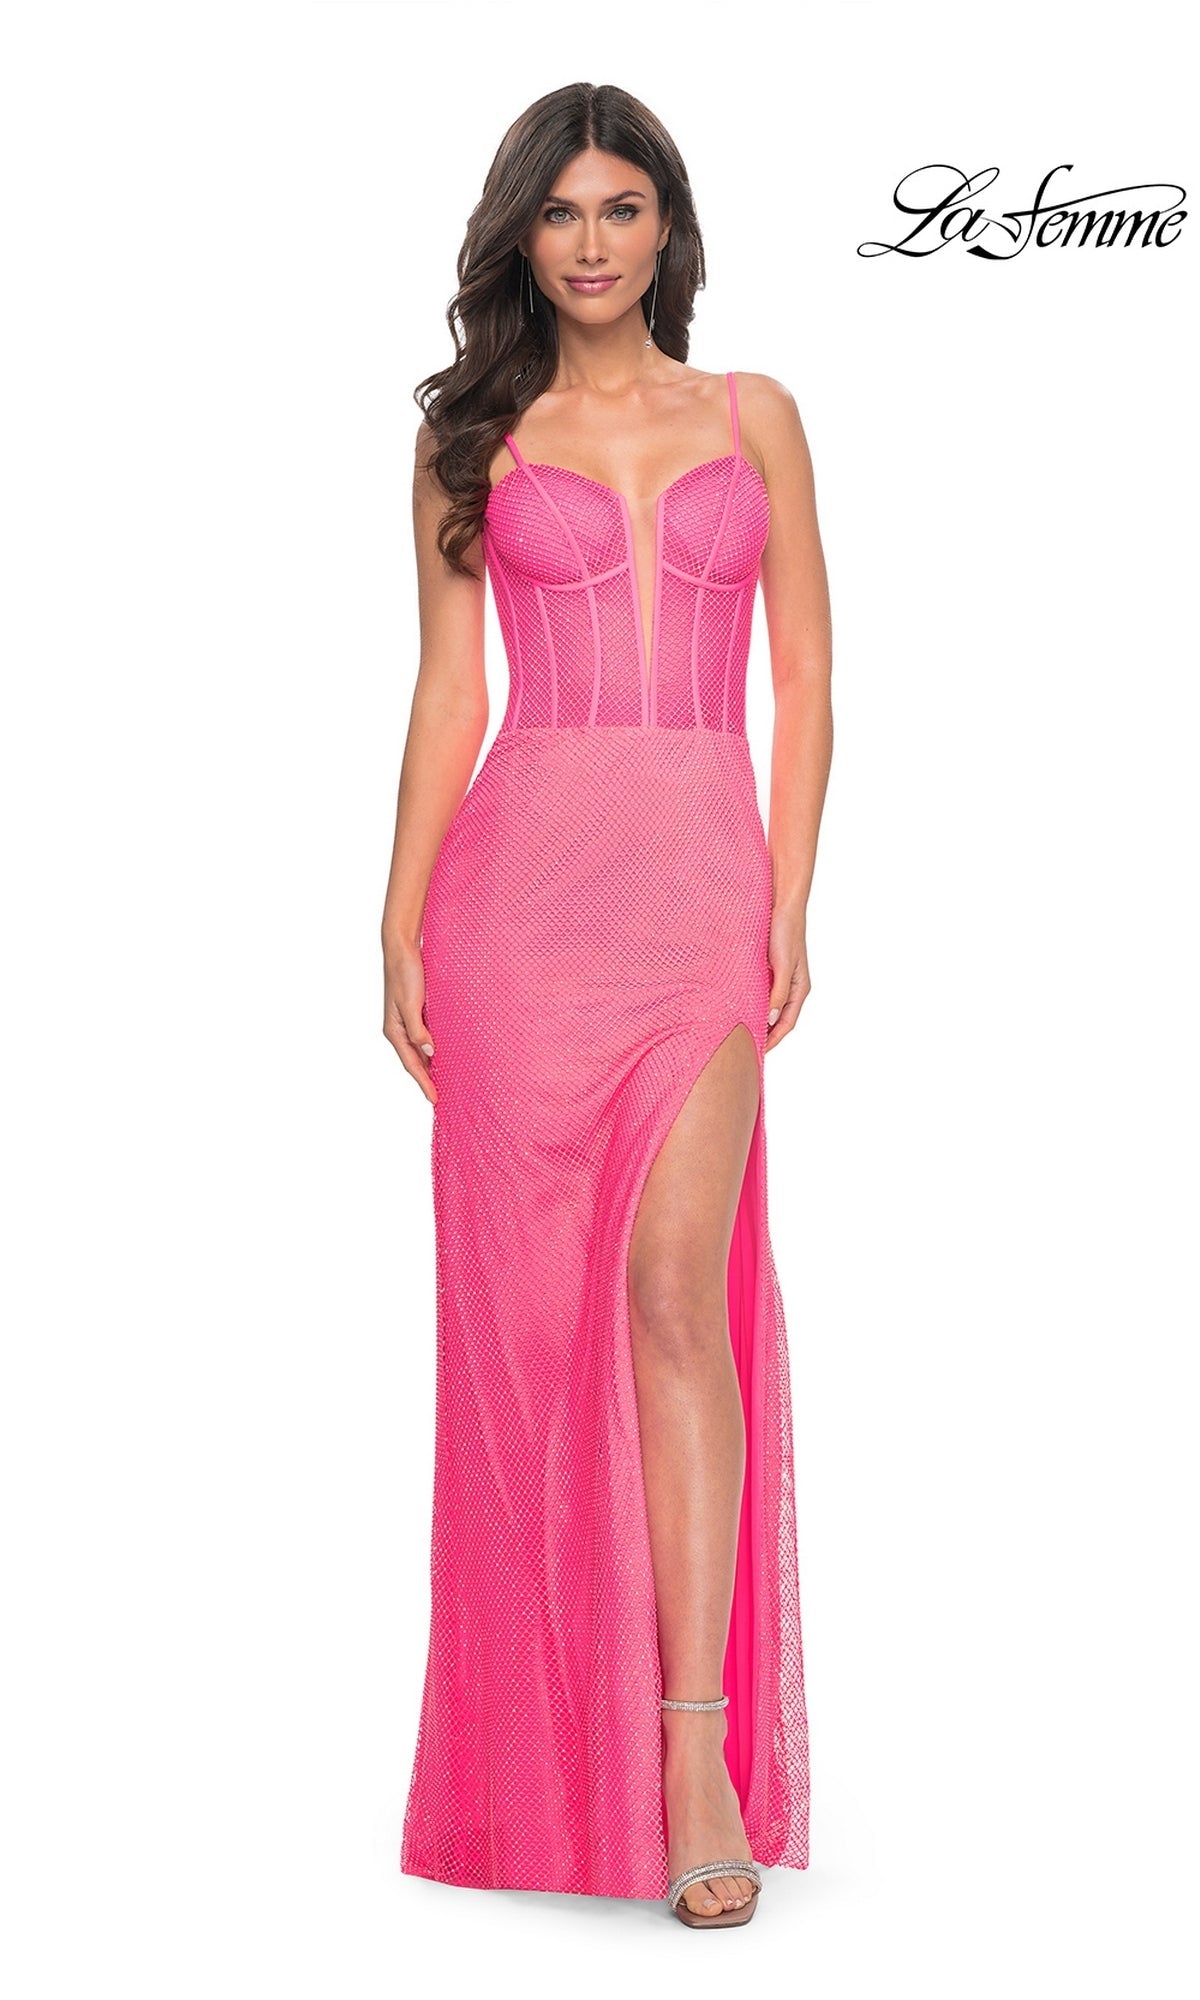  La Femme 32426 Formal Prom Dress